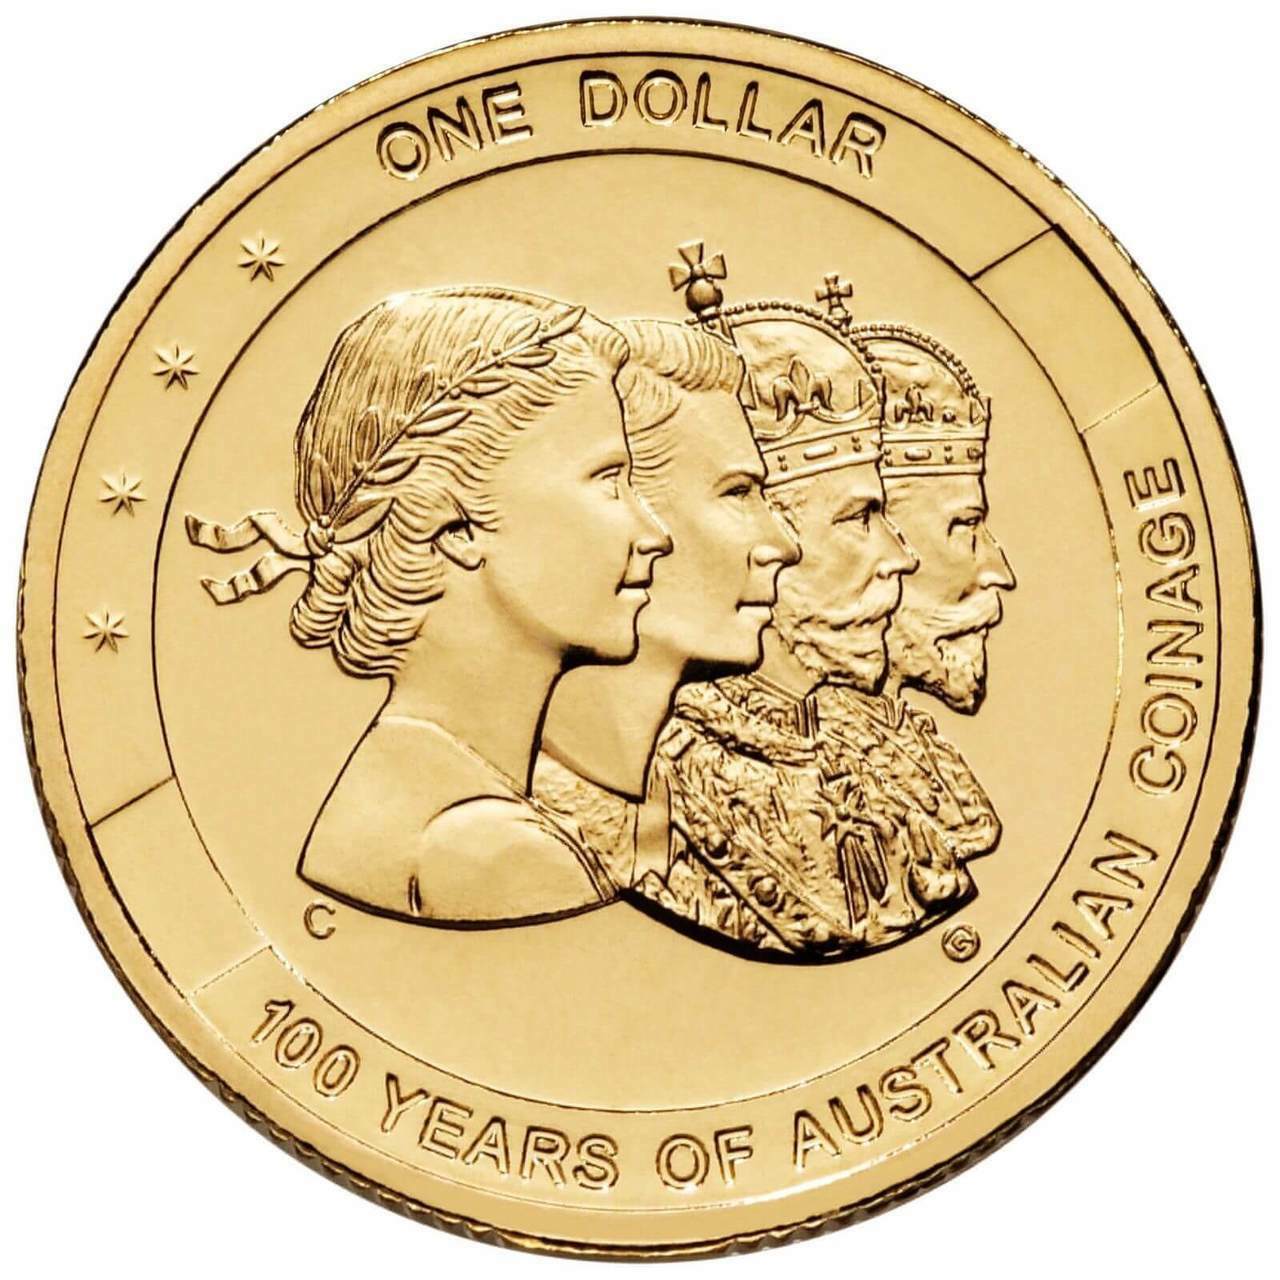 2010 - 100 years of Australian Coinage 4 X Mintmark set One Dollar